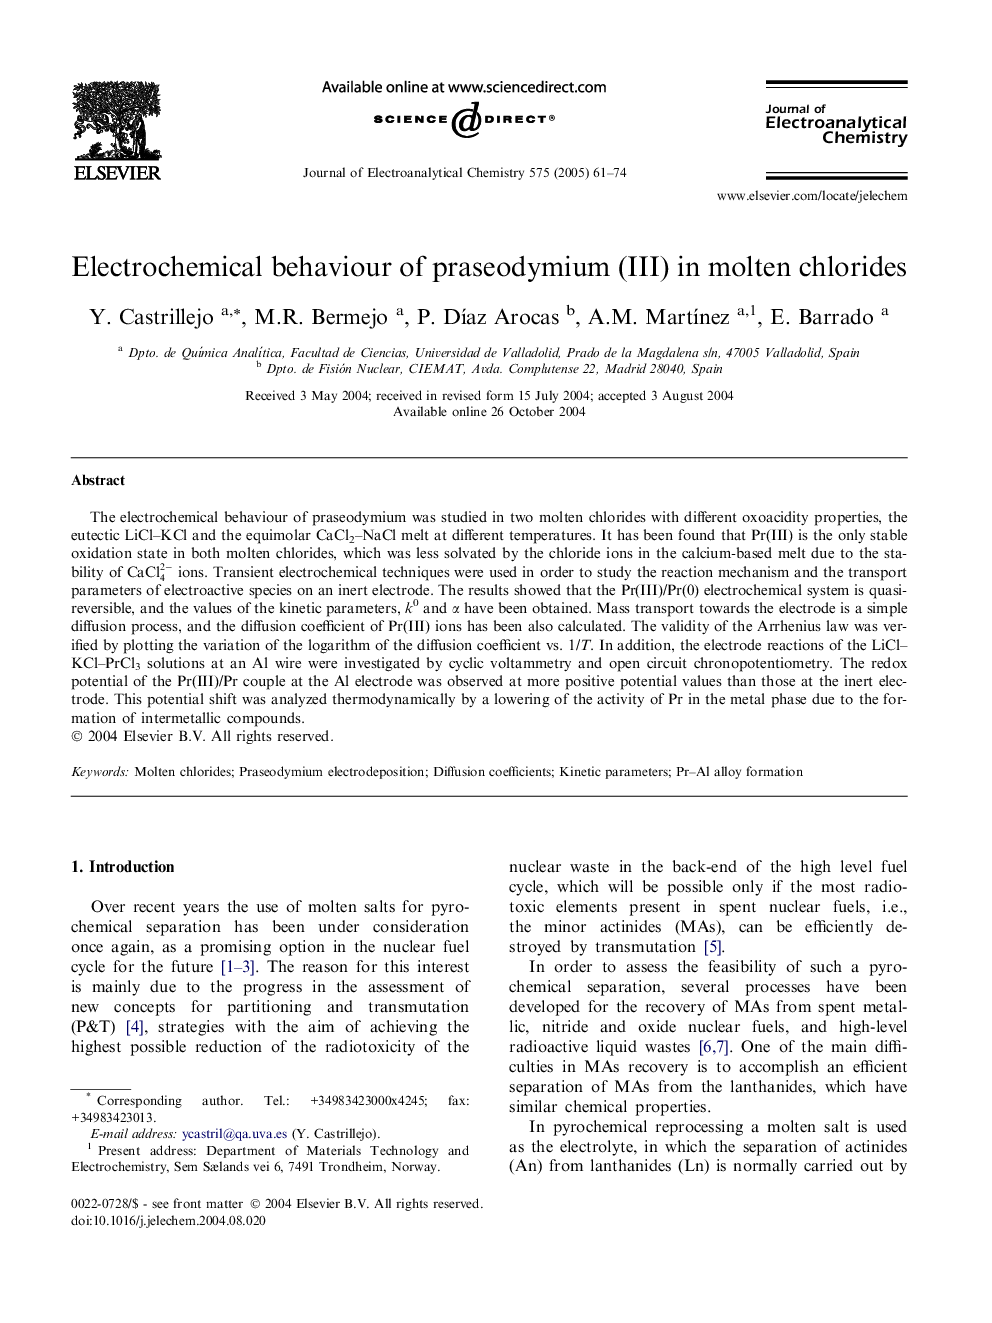 Electrochemical behaviour of praseodymium (III) in molten chlorides